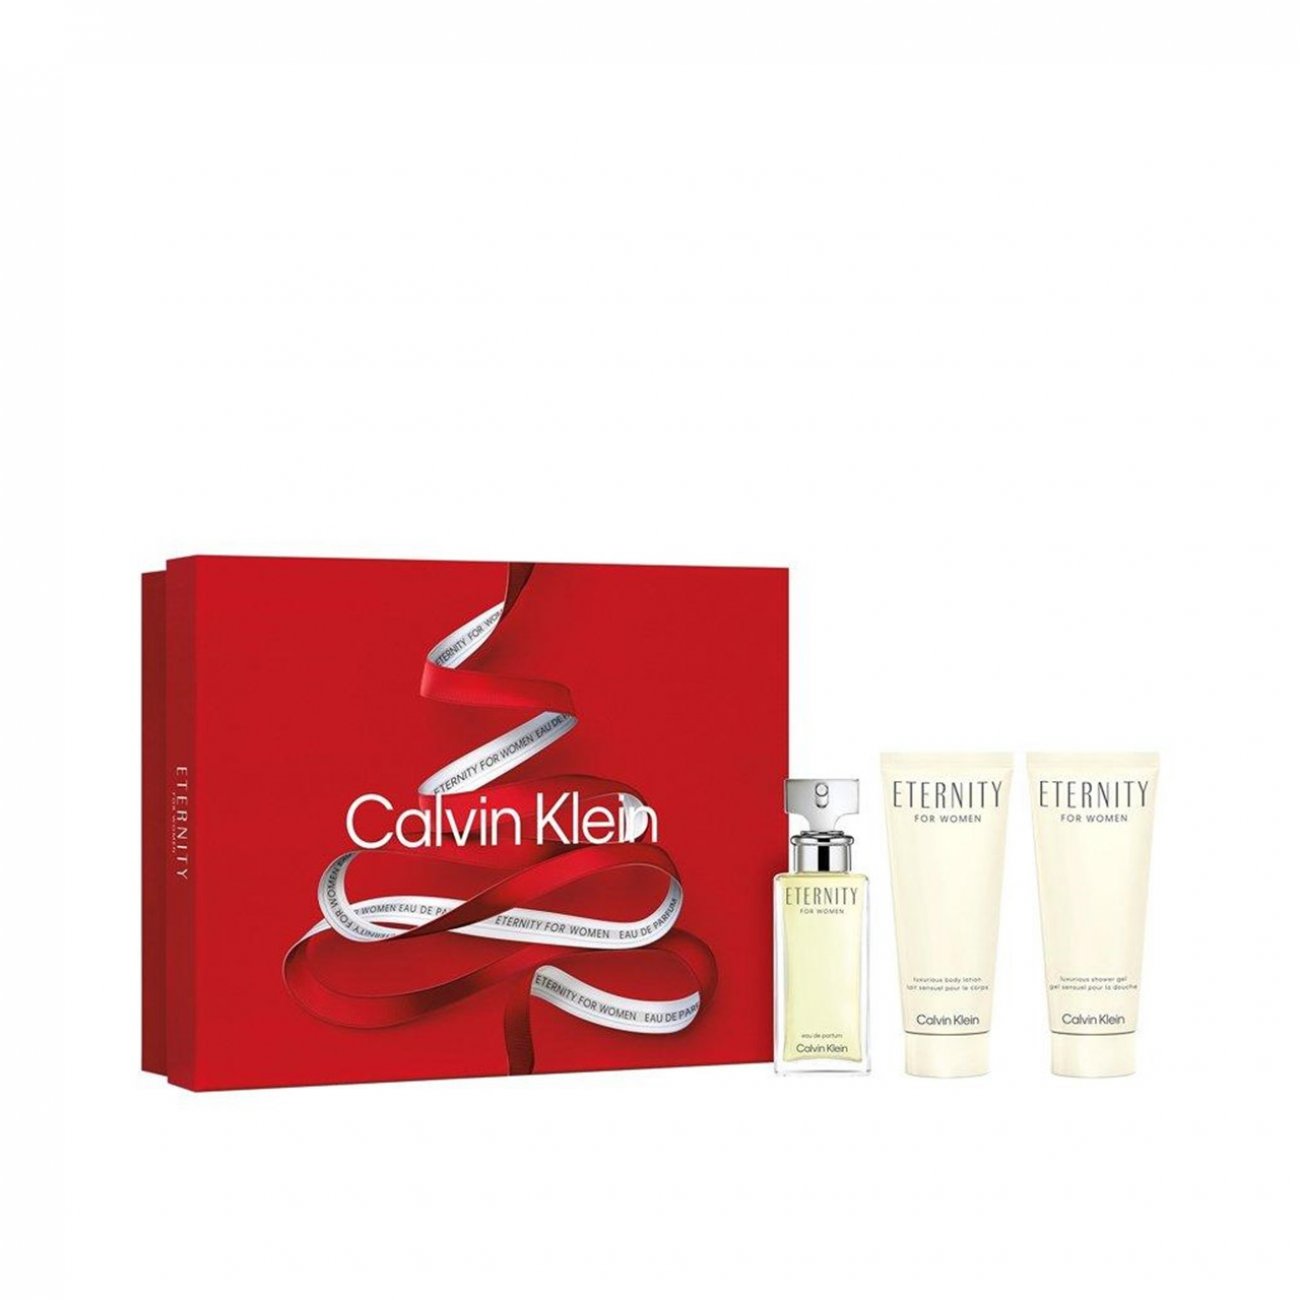 Buy GIFT SET:Calvin Klein Eternity For Women Eau de Parfum 50ml Holiday  Coffret · Switzerland